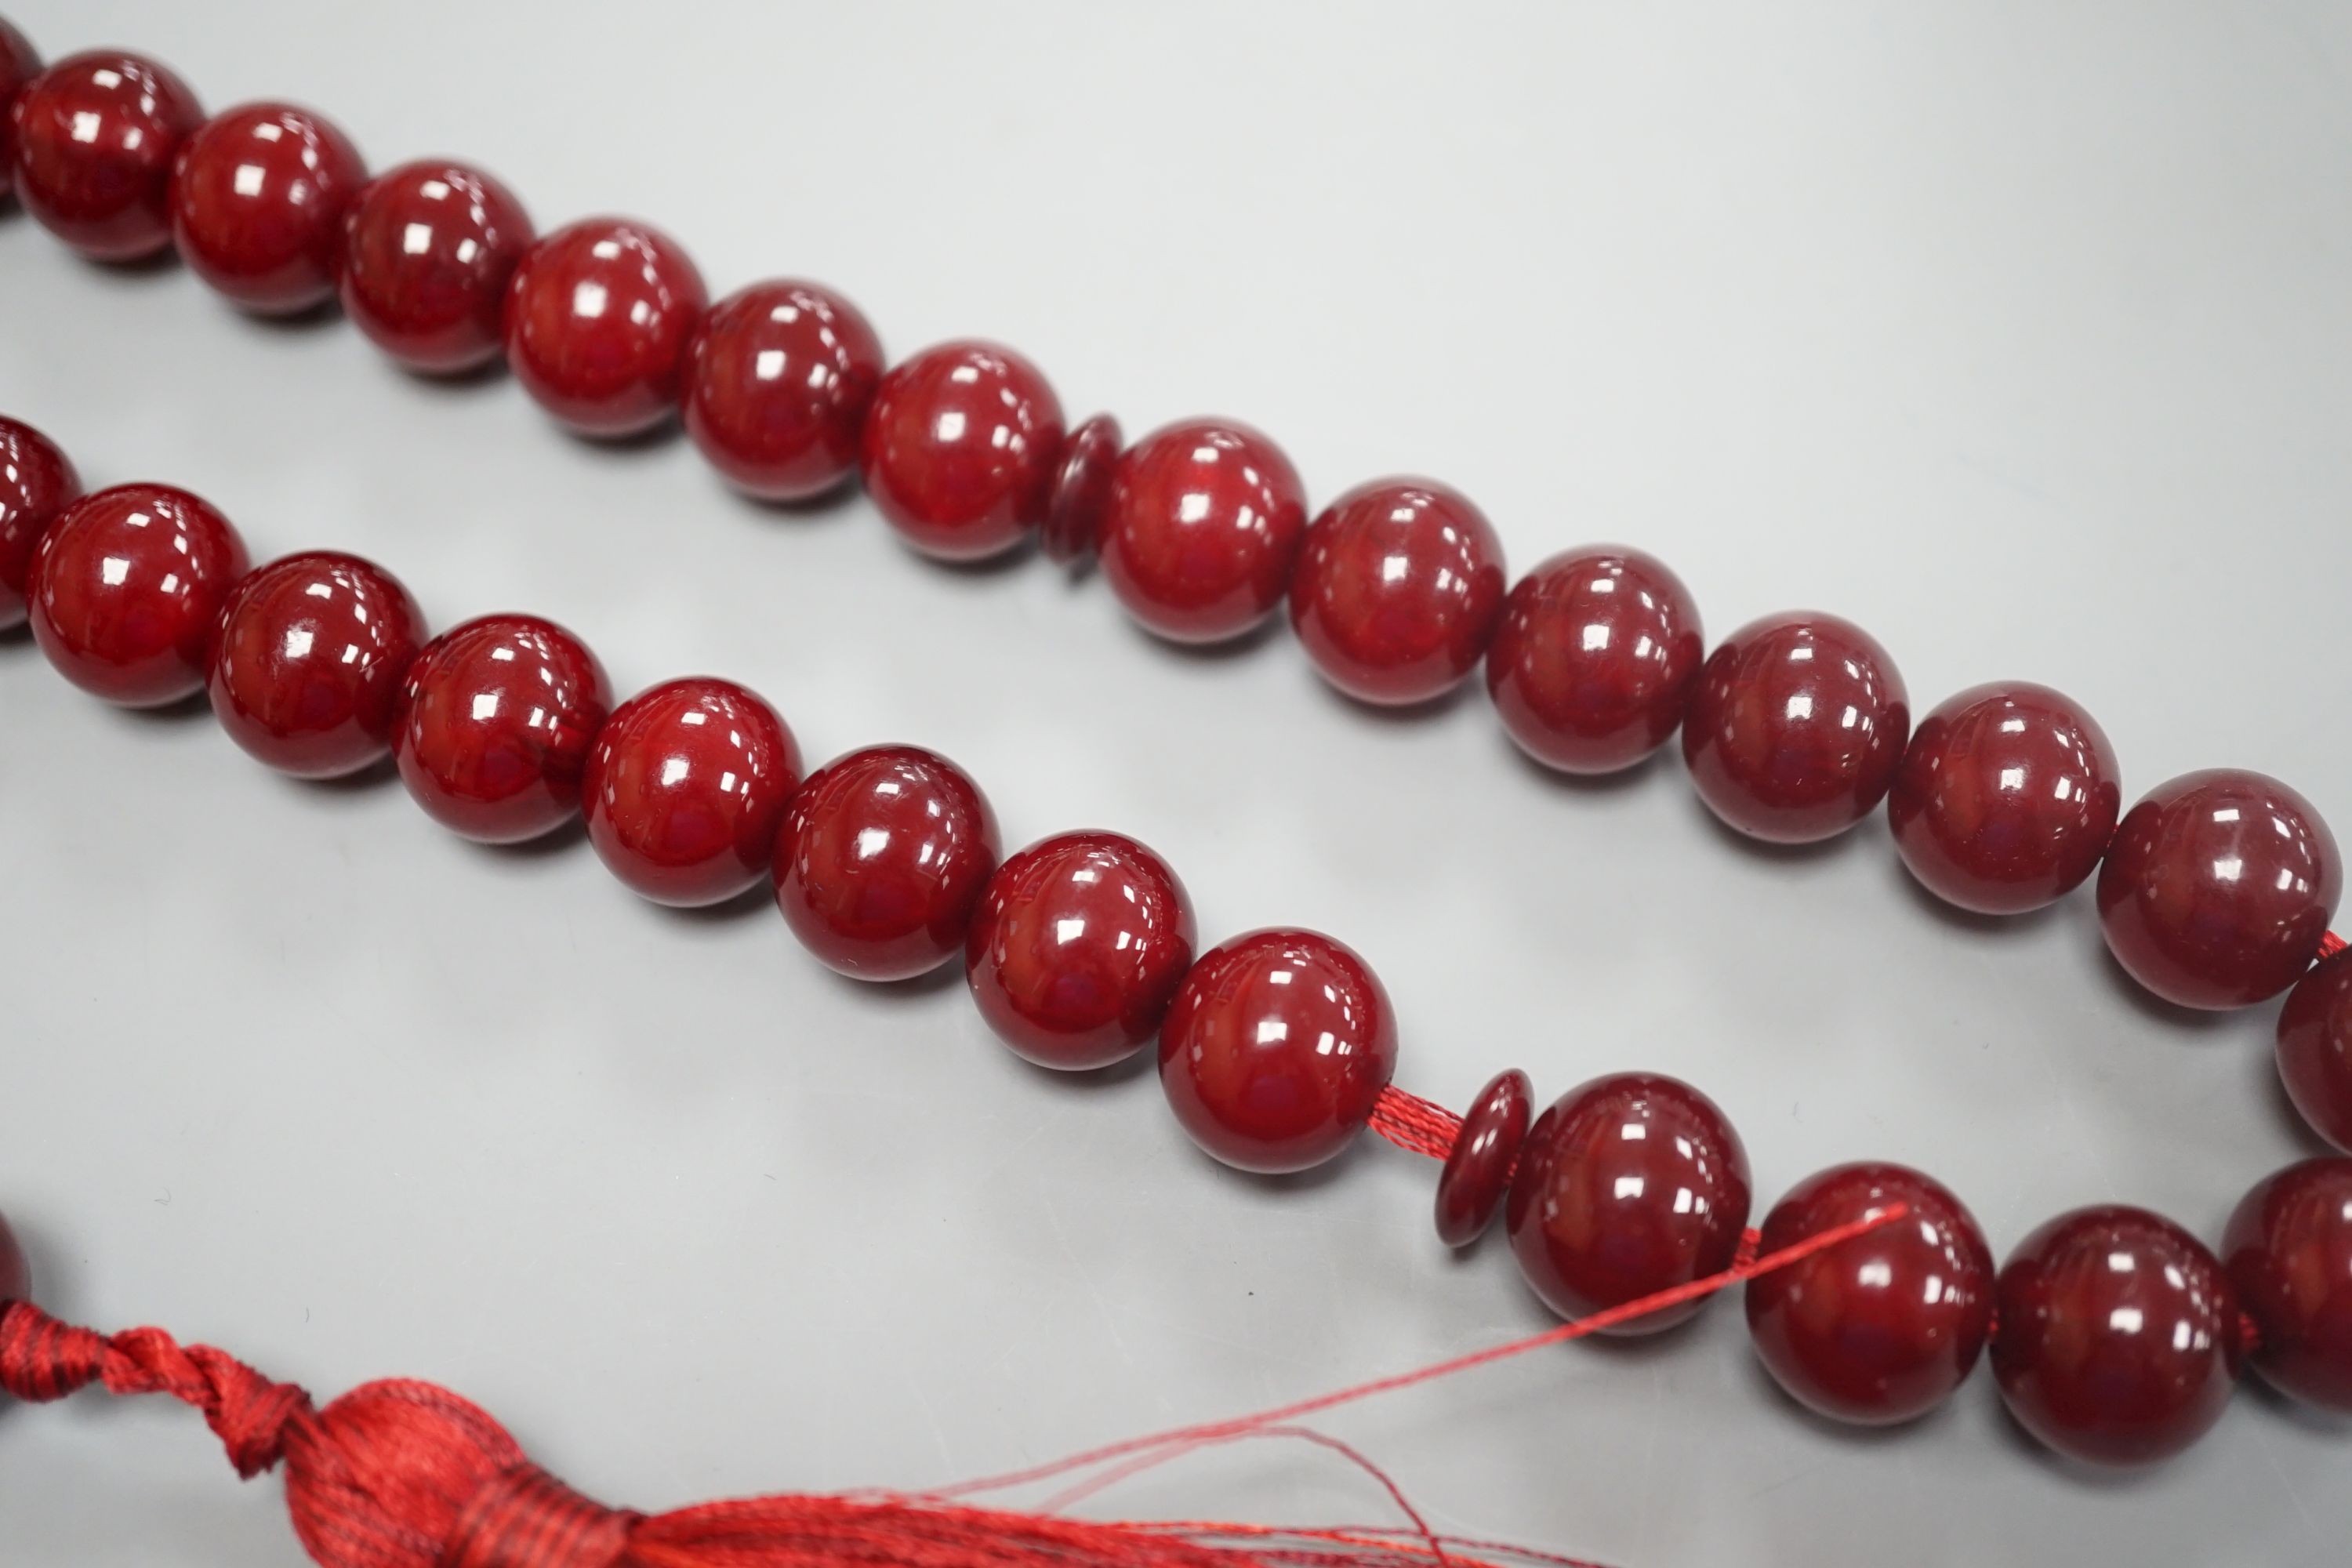 A single strand cherry amber bakelite necklace, 92cm including tassel, gross weight 88 grams.